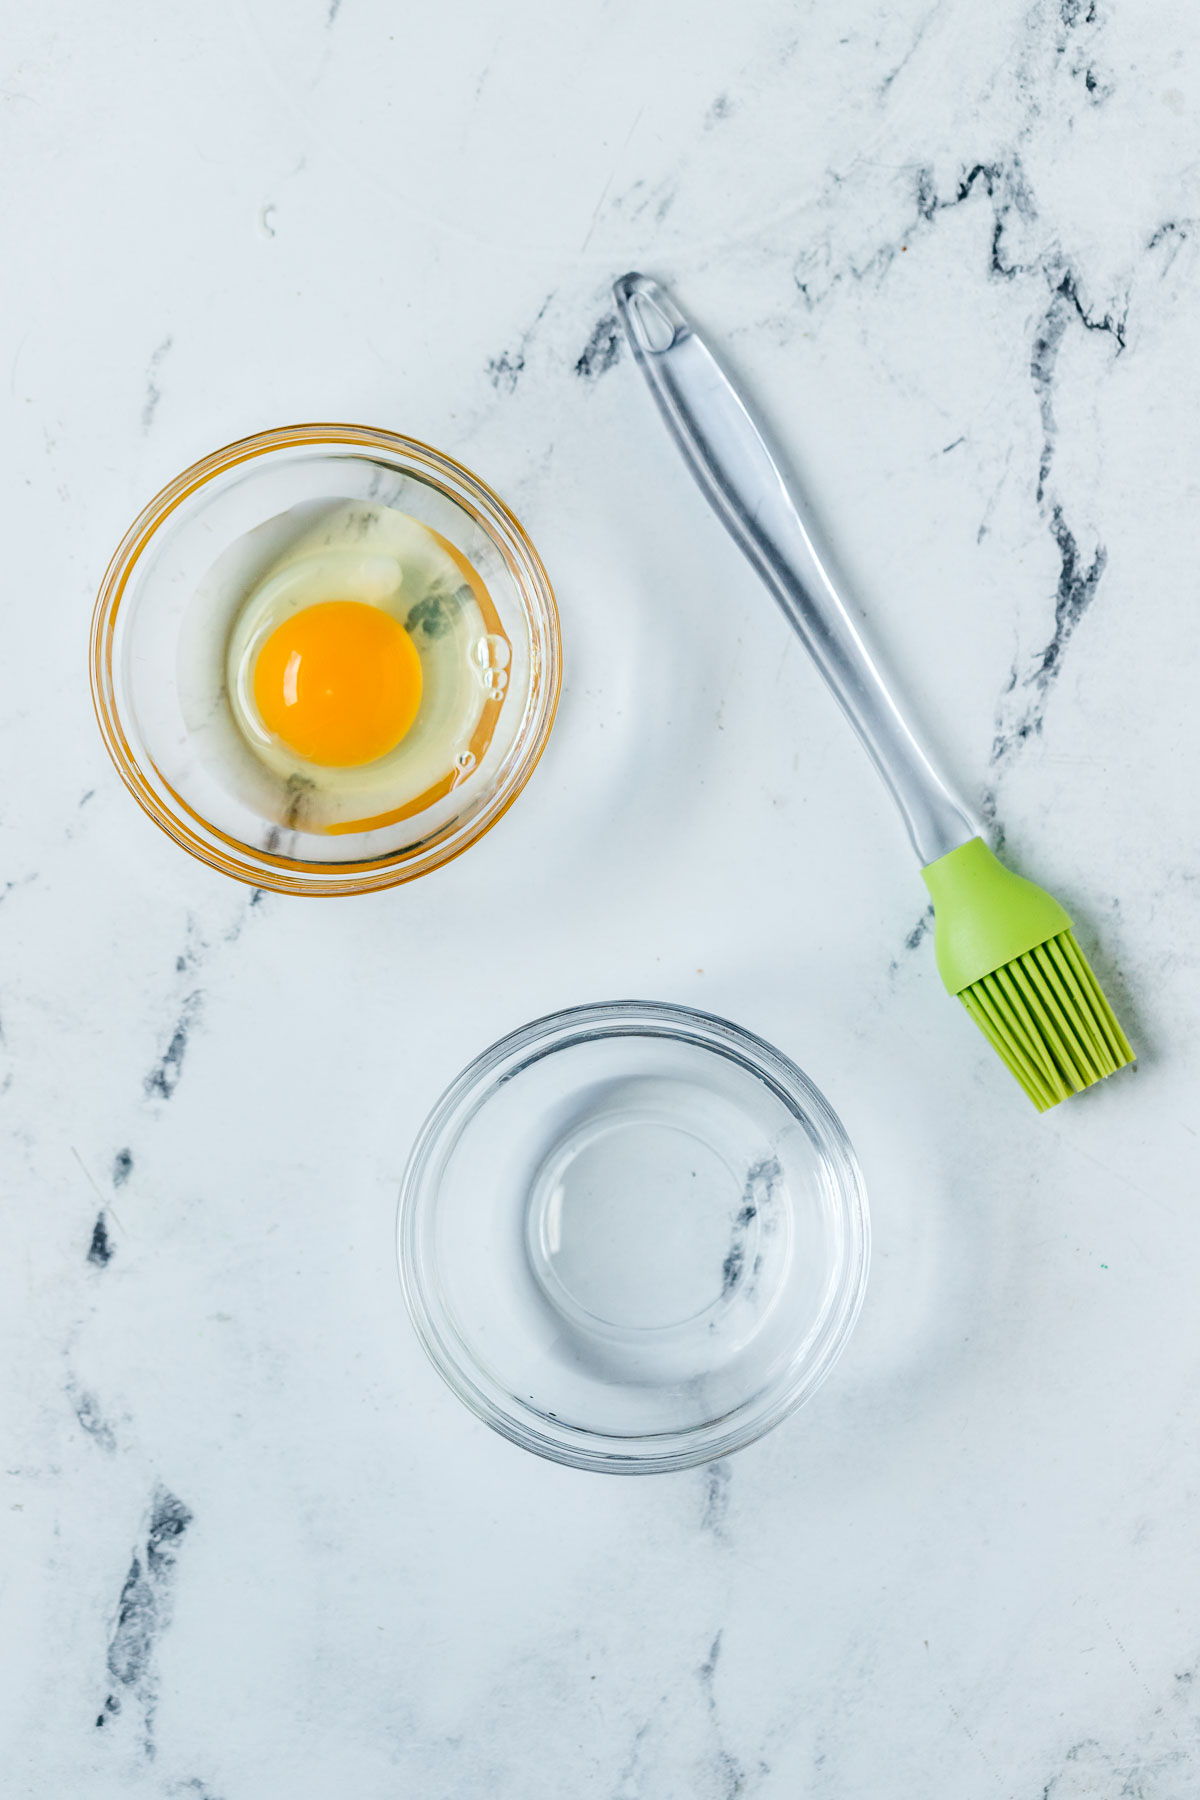 Basic Egg Wash Recipe - Crazy for Crust